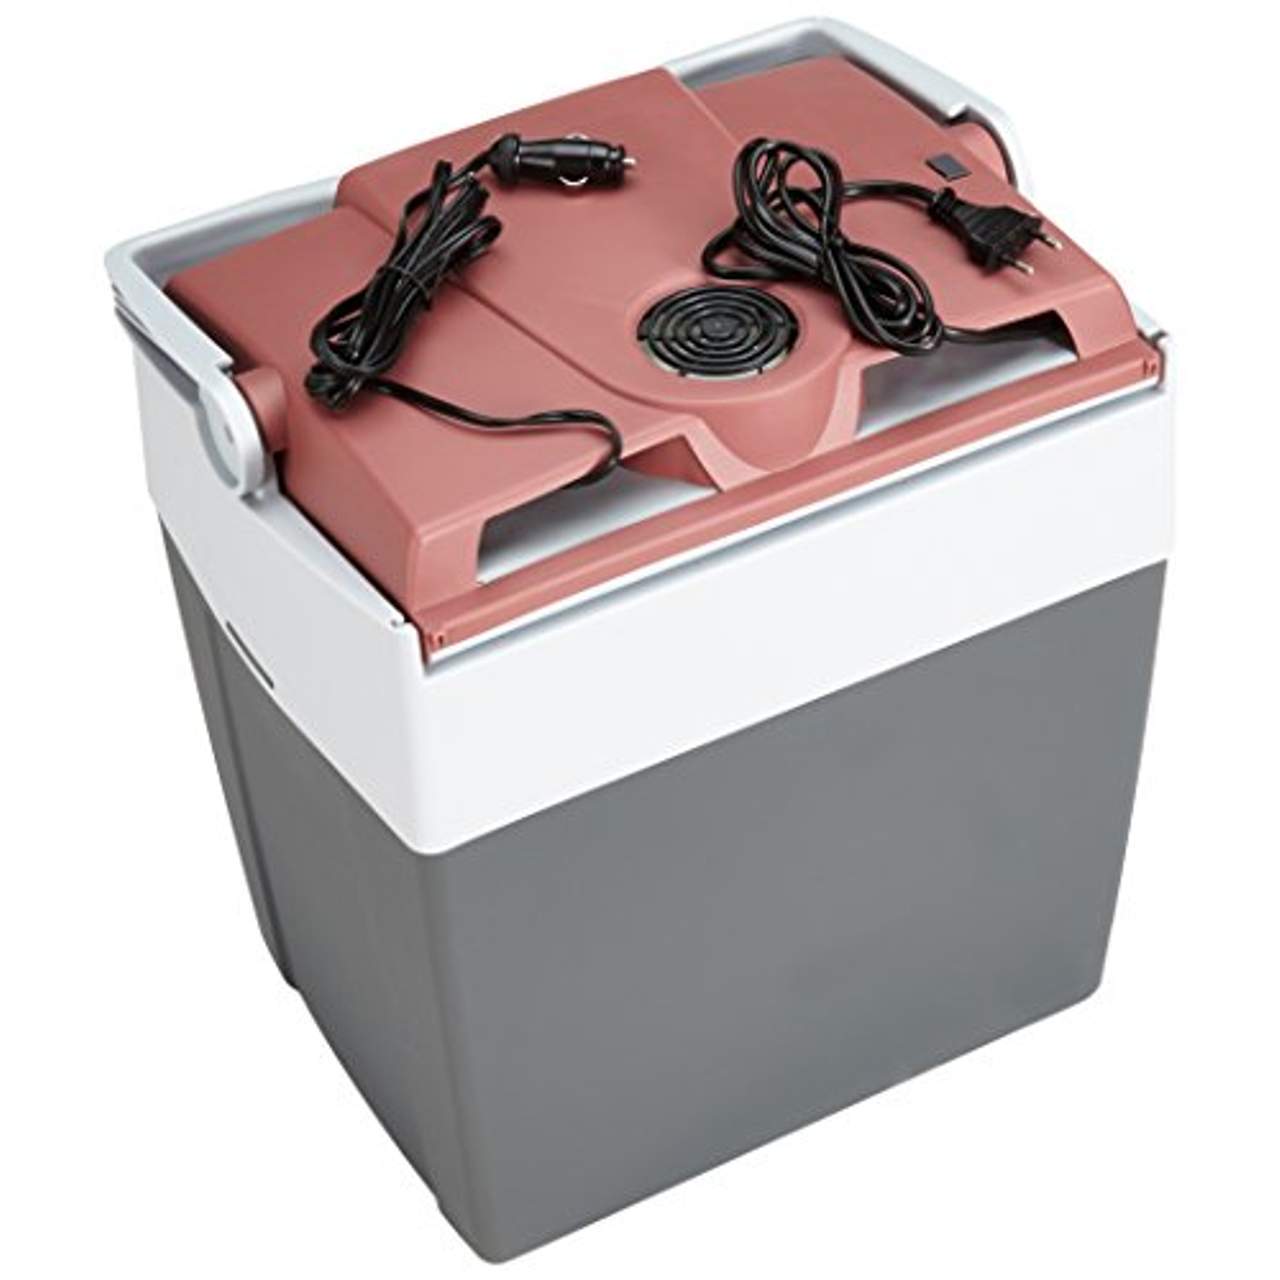 Mobicool G30 AC DC tragbare thermo-elektrische Kühlbox